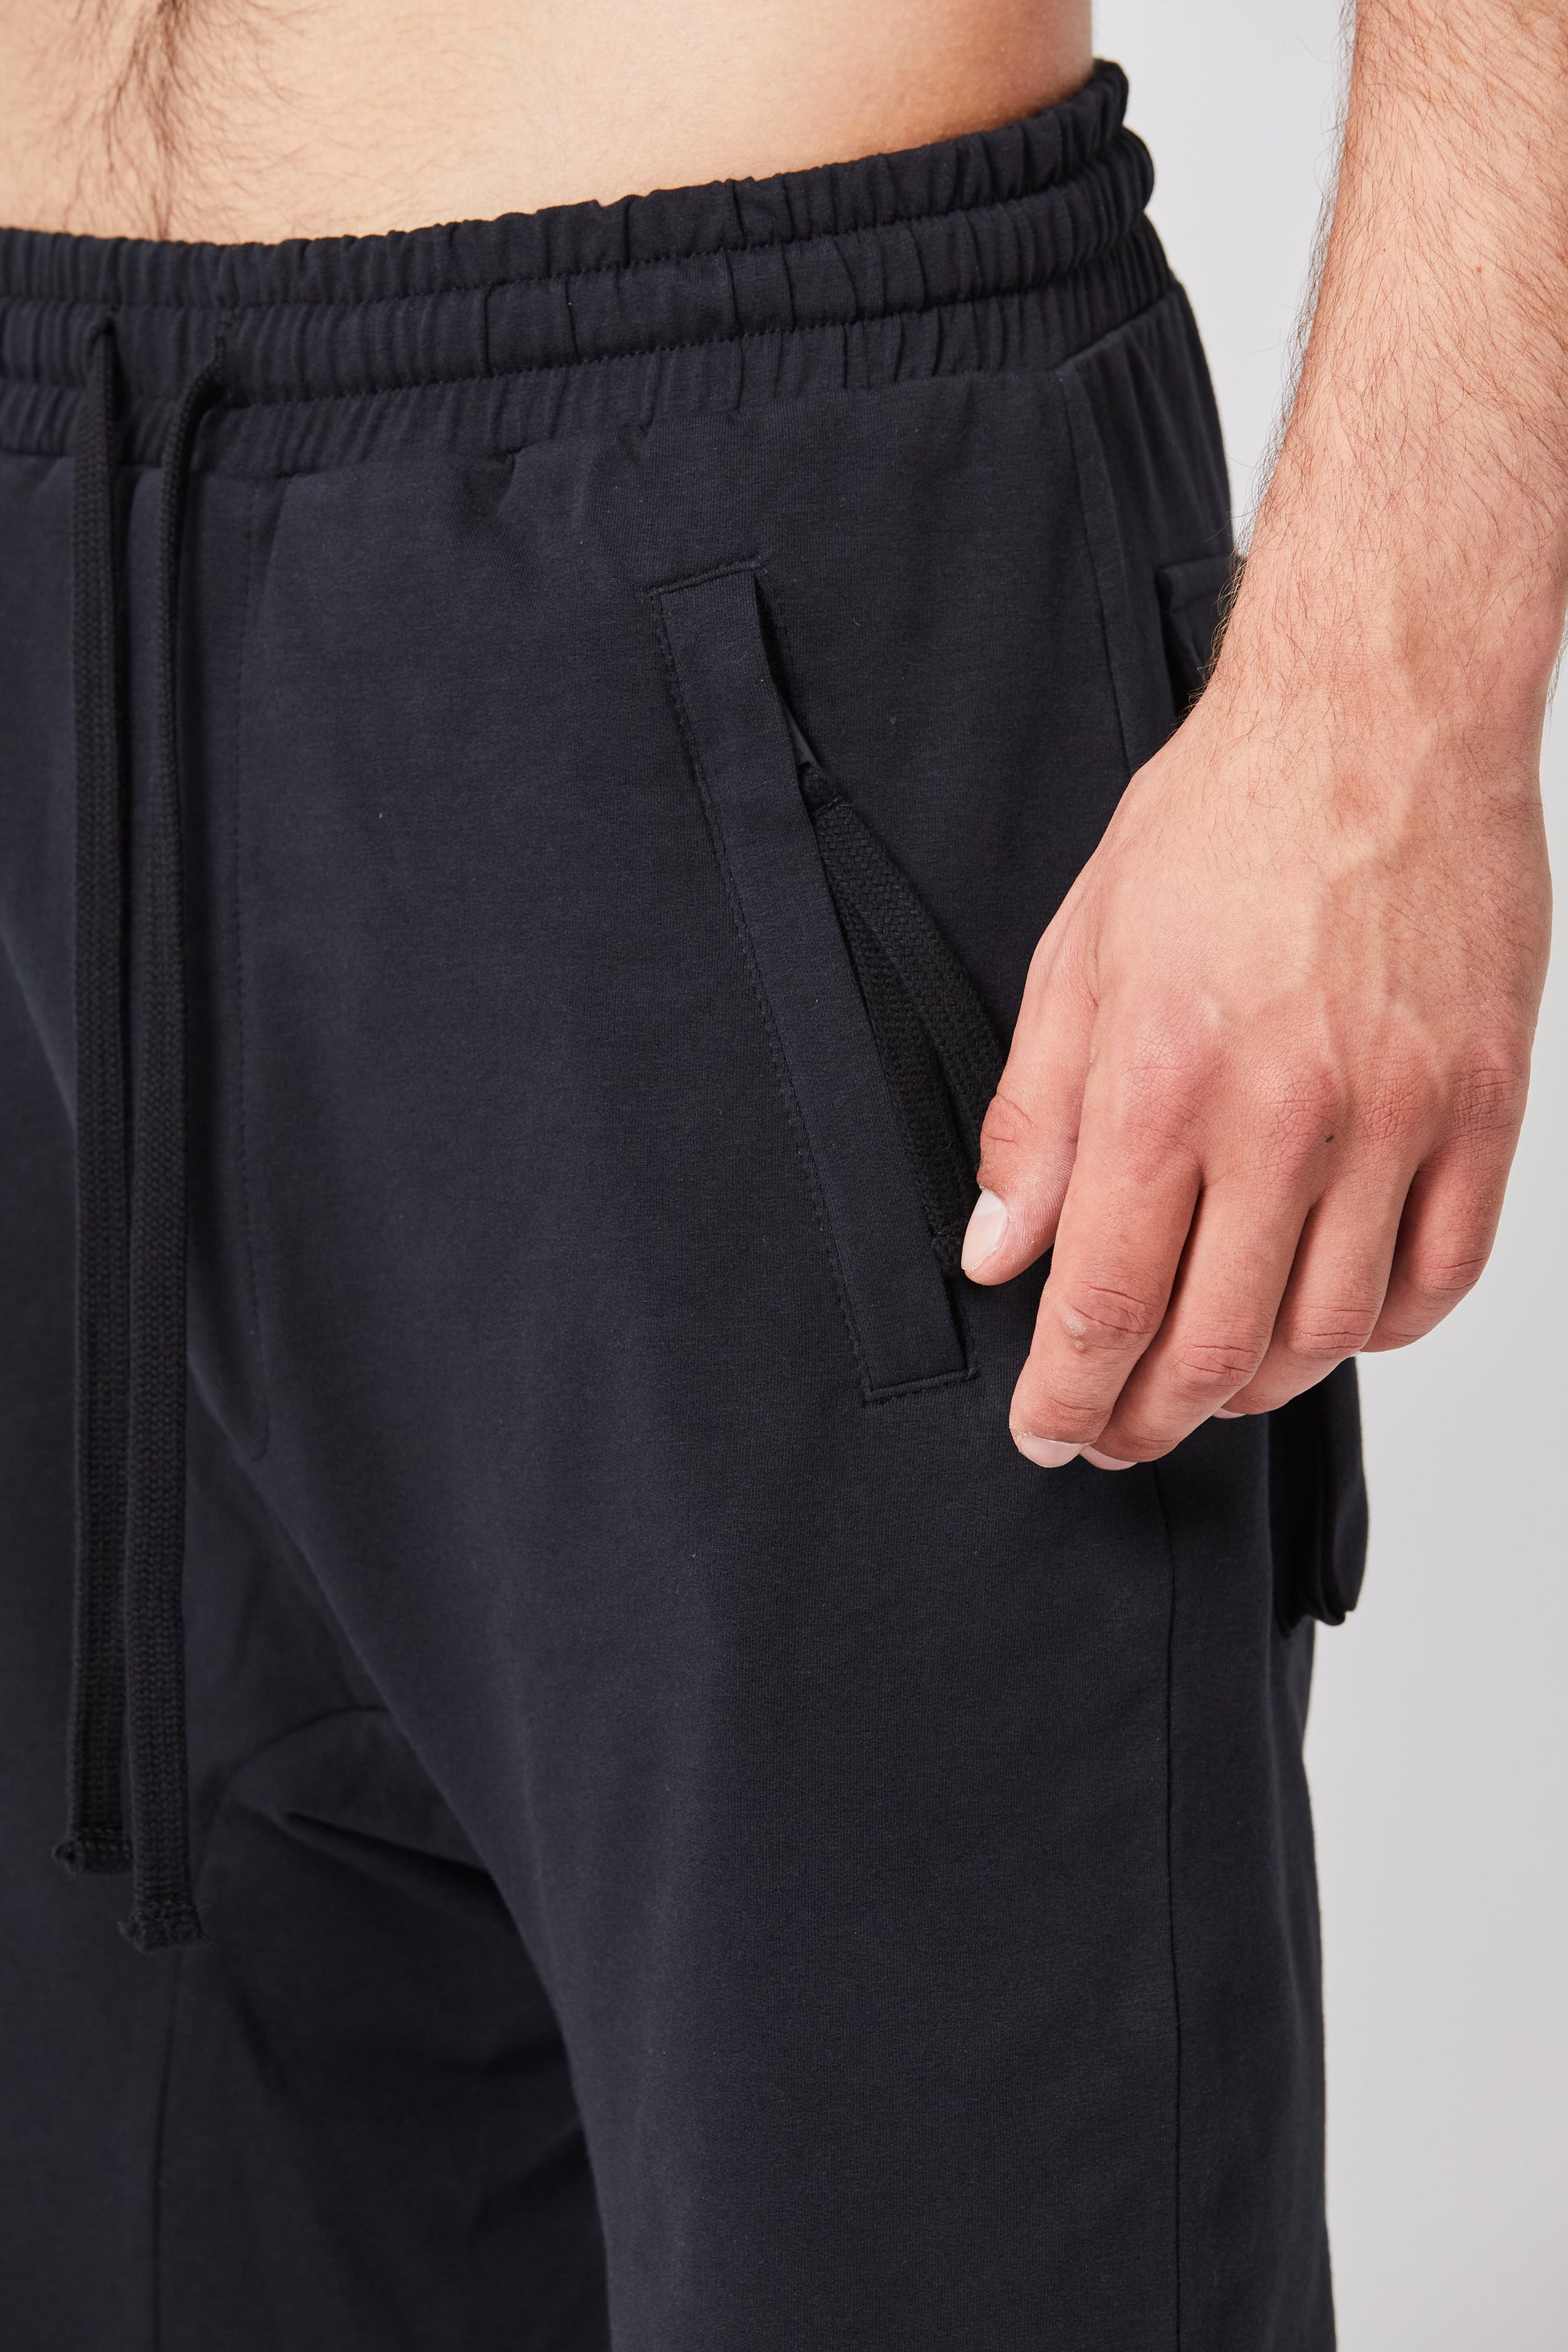 379 Black – Archive Shorts The MST Modal Drop Cotton Crotch Stretch